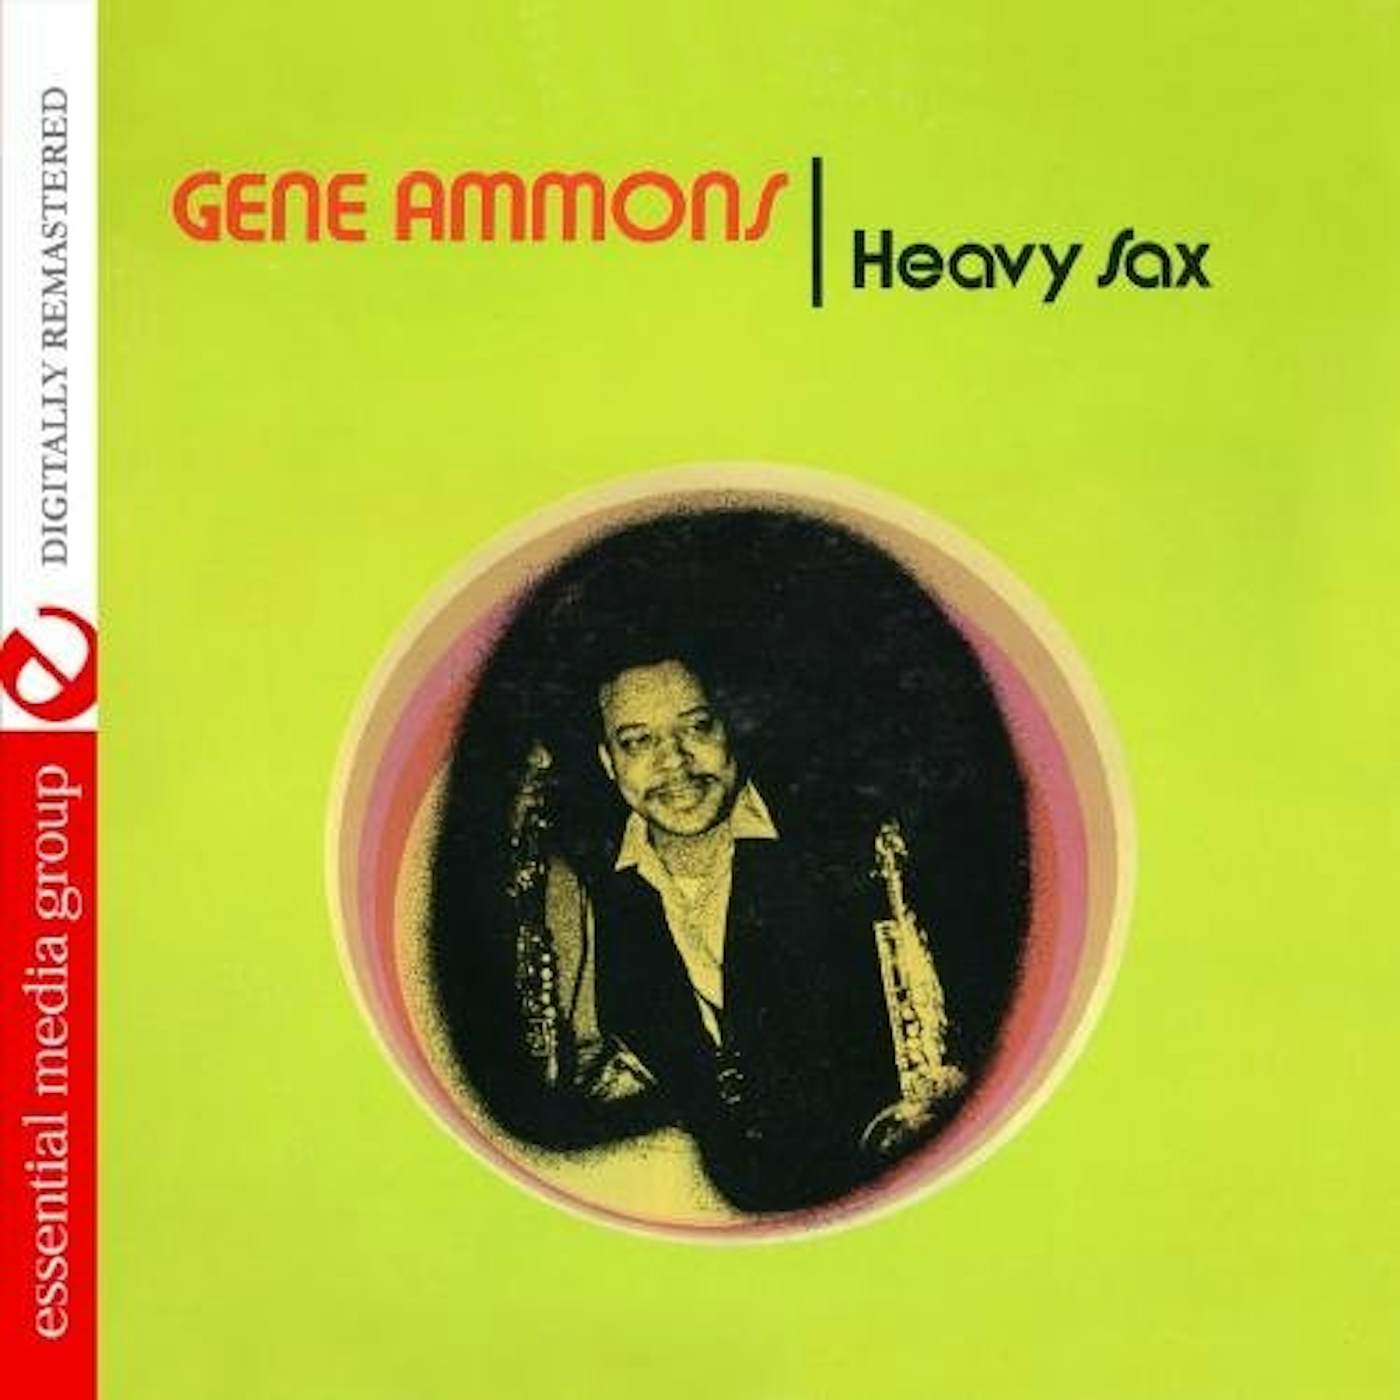 Gene Ammons HEAVY SAX CD